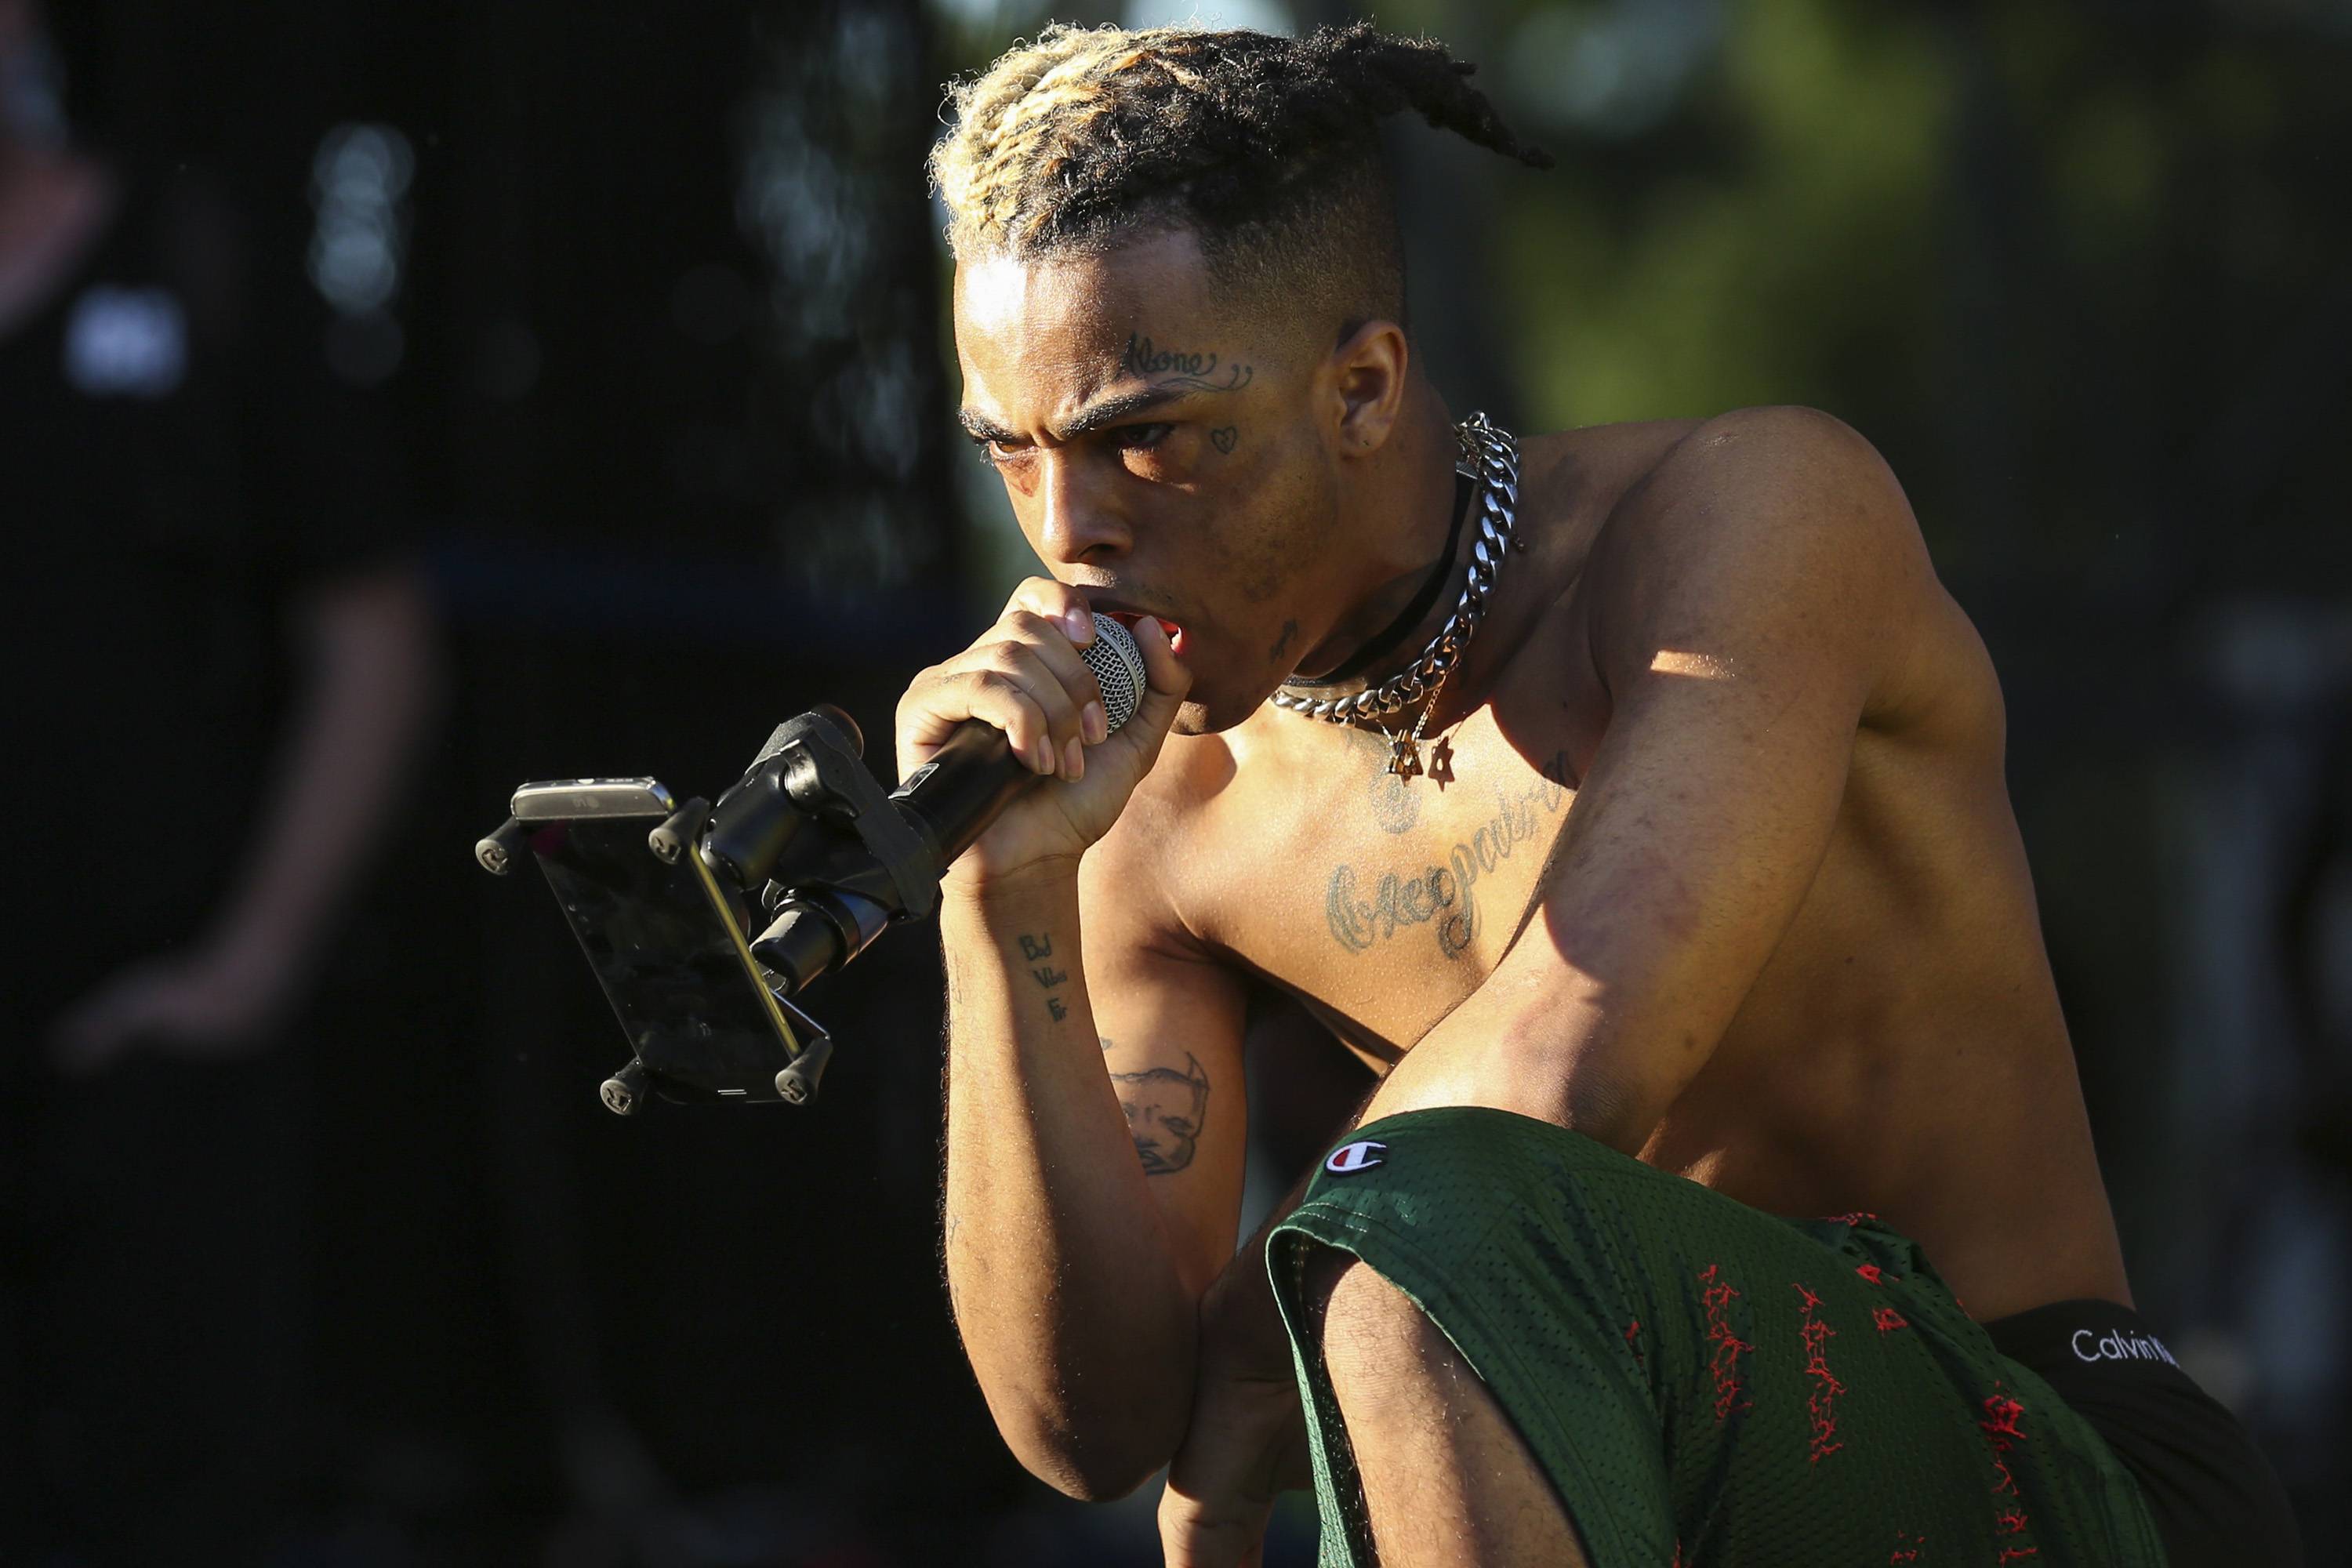 Celebrities share their condolences for the fallen rapper, XXXTentacion.